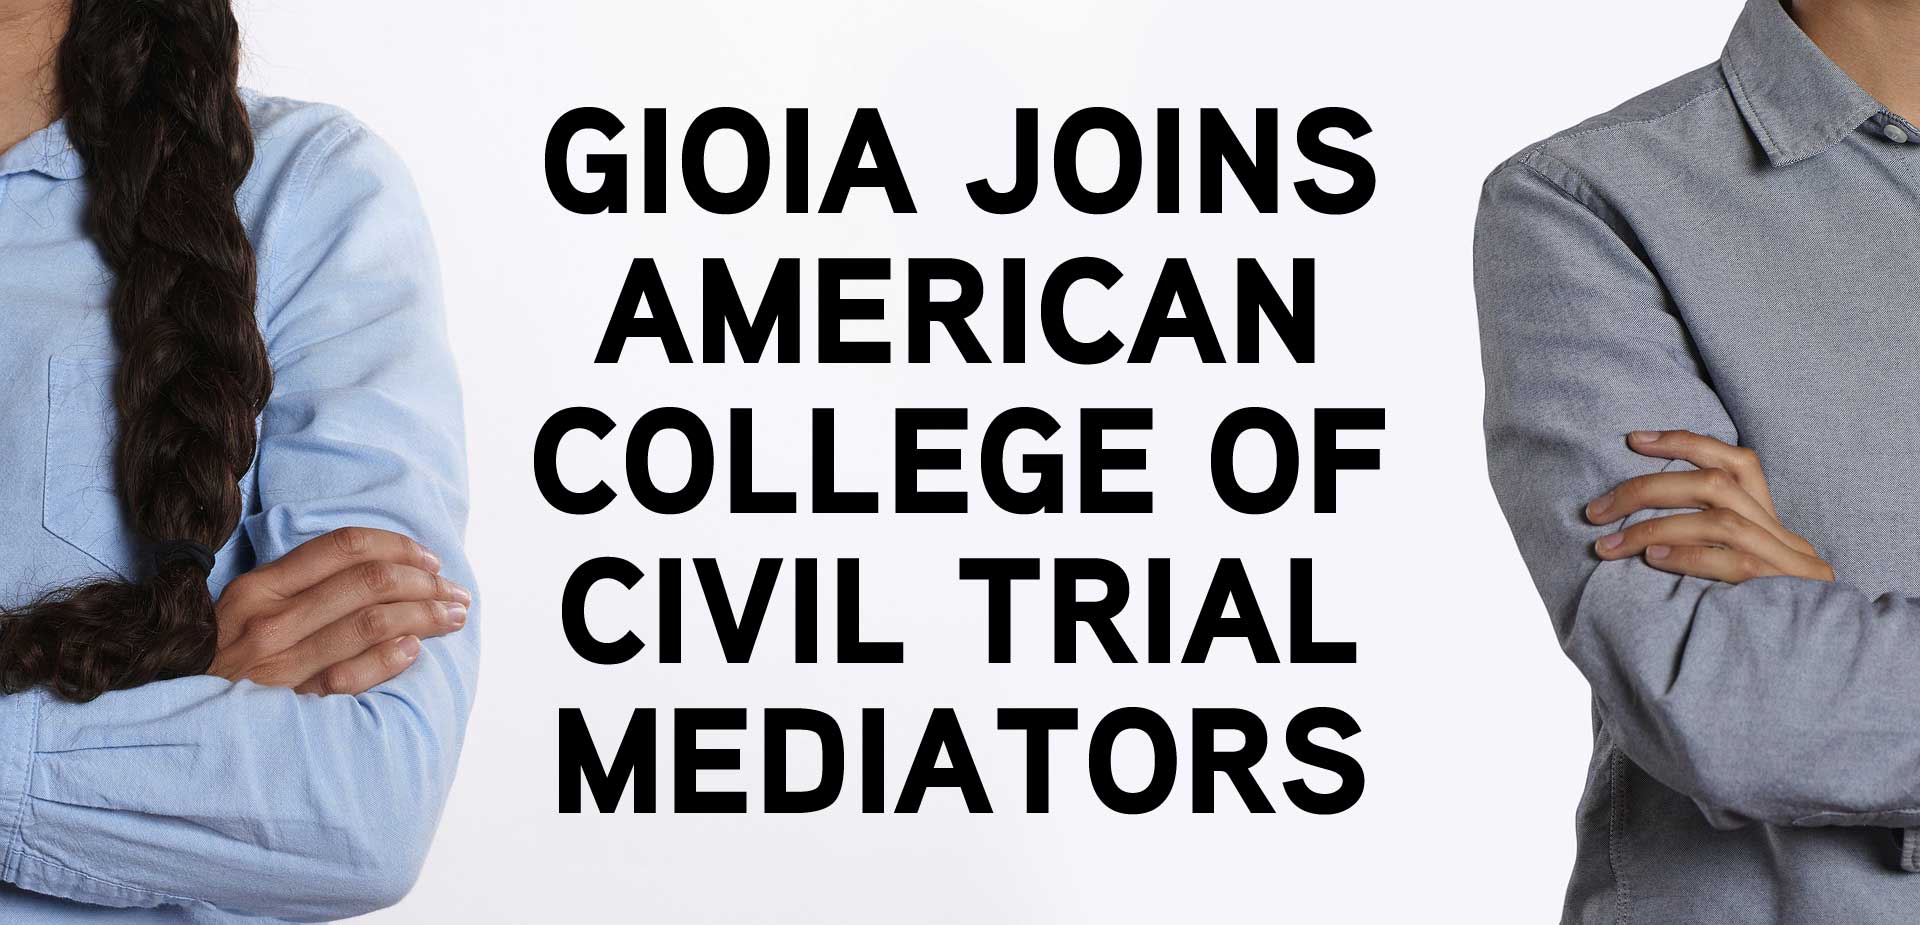 Gioia Joins American College of Civil Trial Mediators